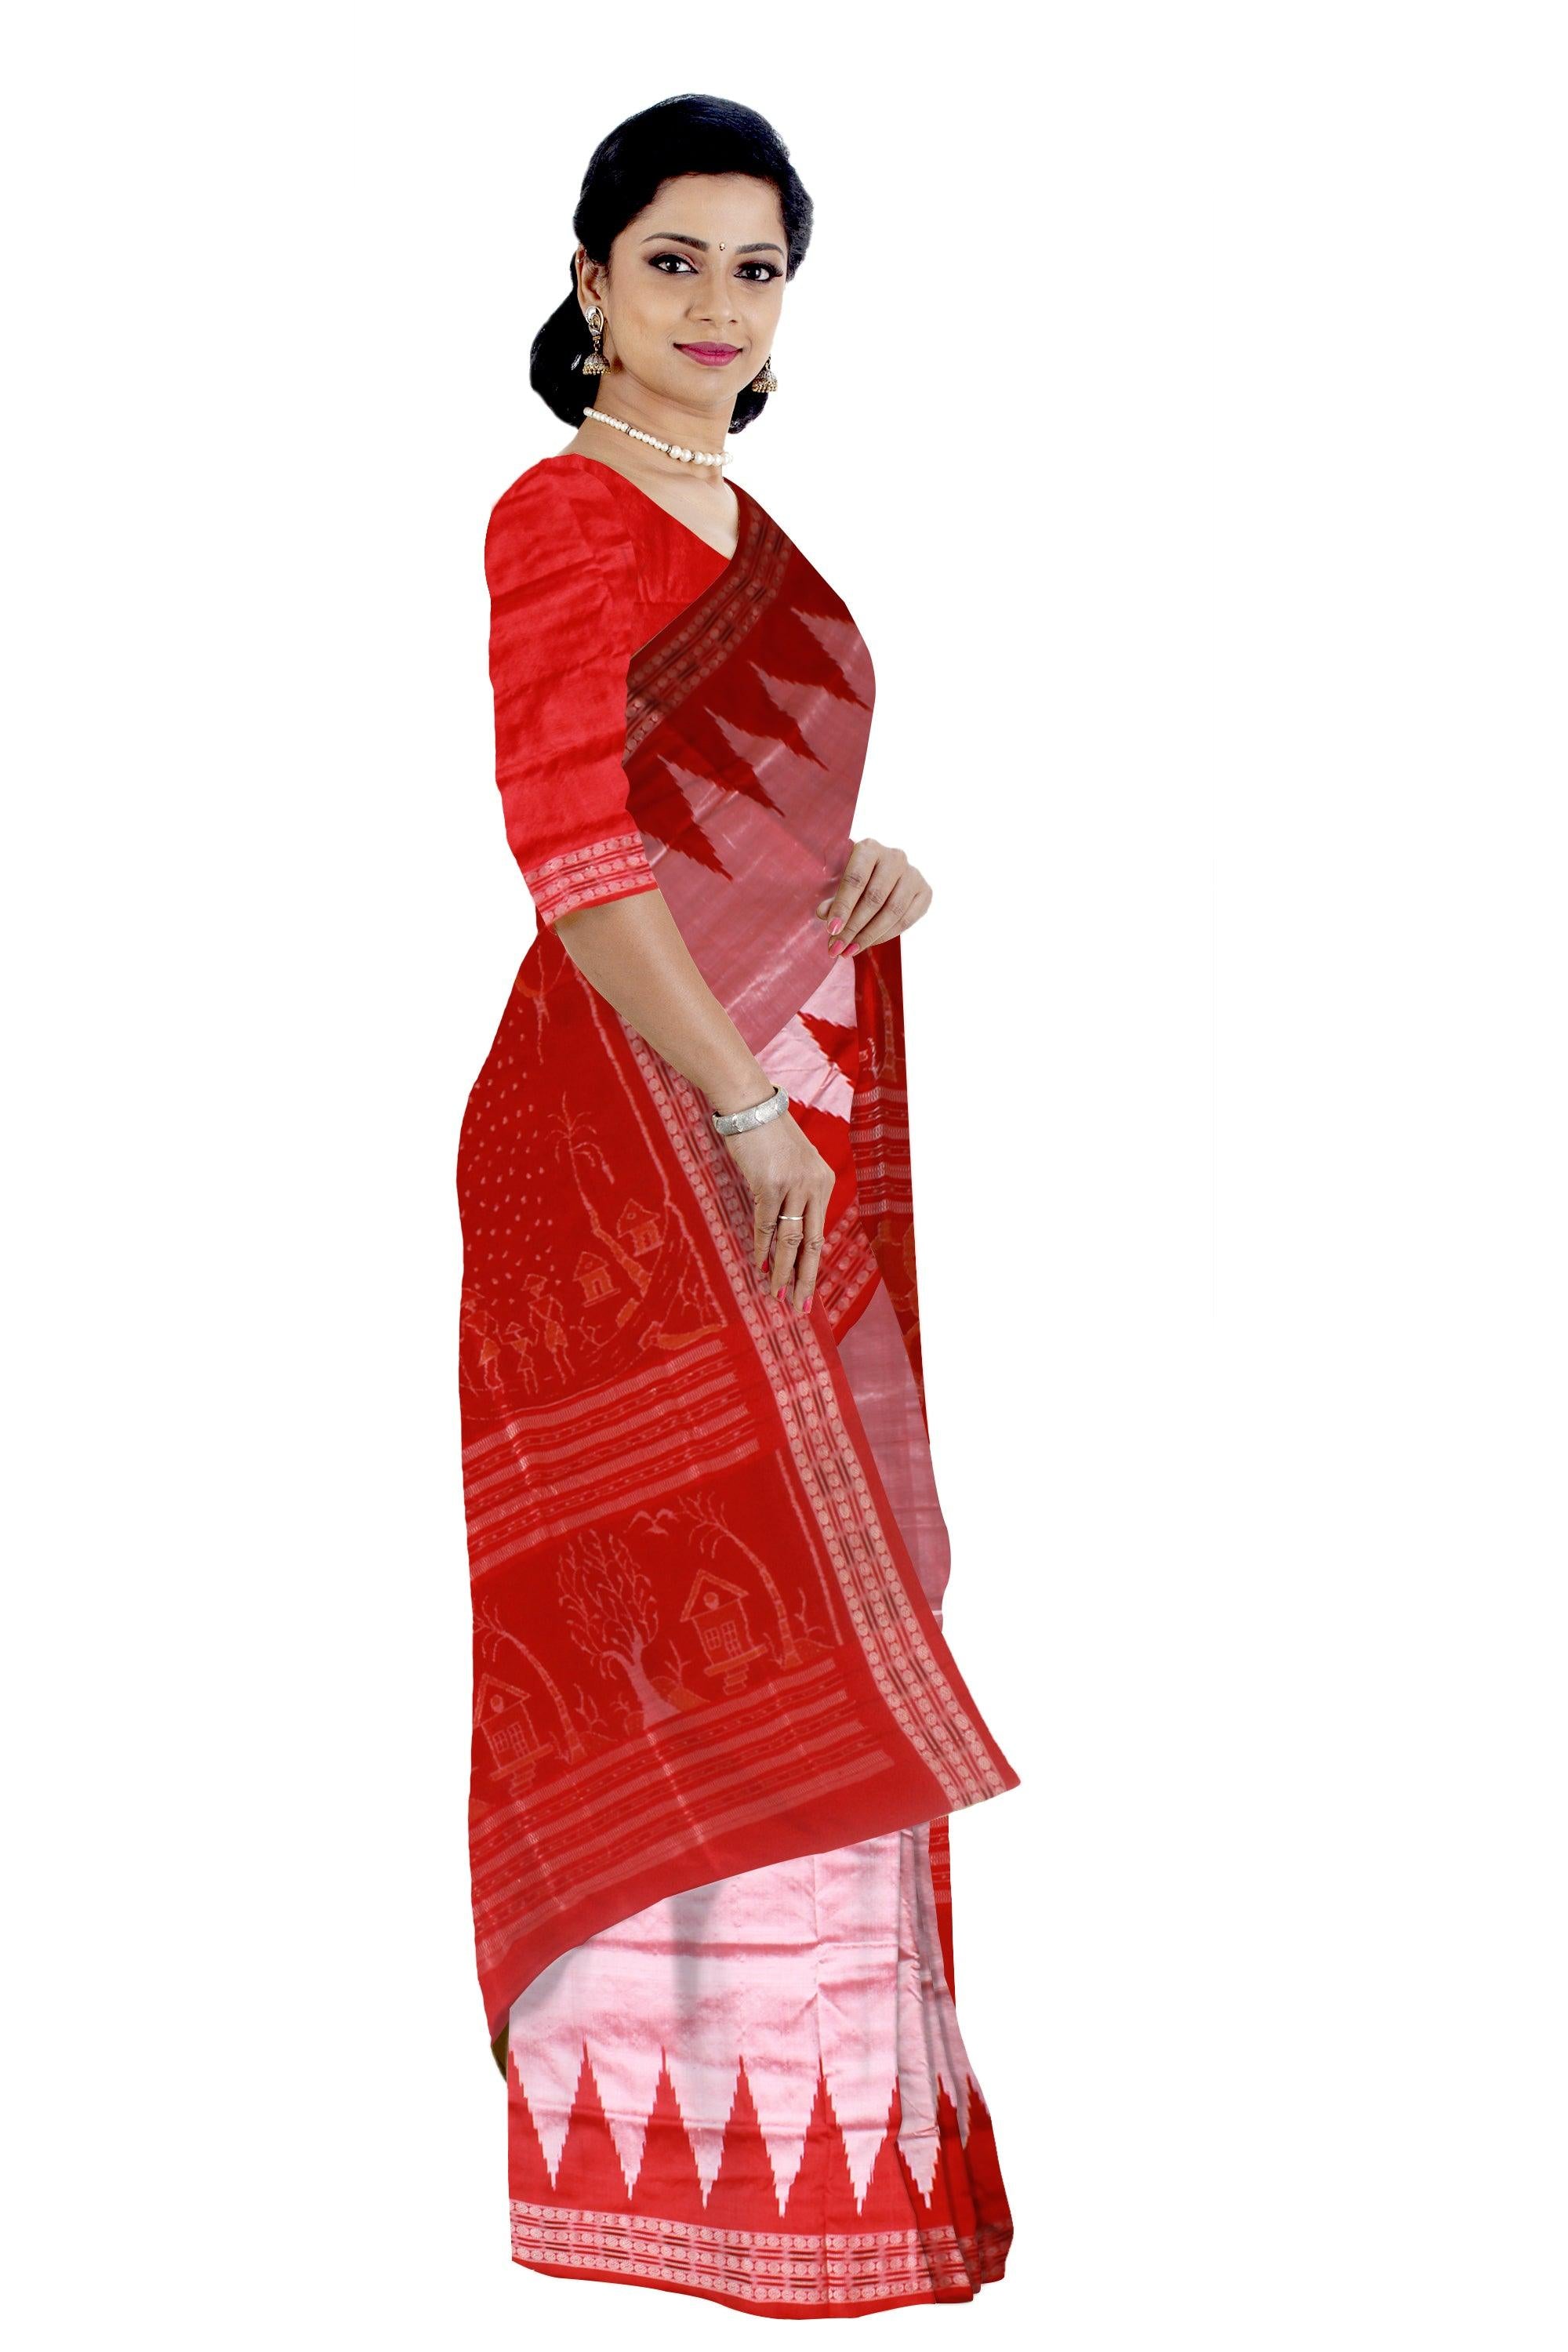 Sambalpuri Original Silk Saree in Light pink and Red color Kumbha design in the Border  with blouse piece. - Koshali Arts & Crafts Enterprise